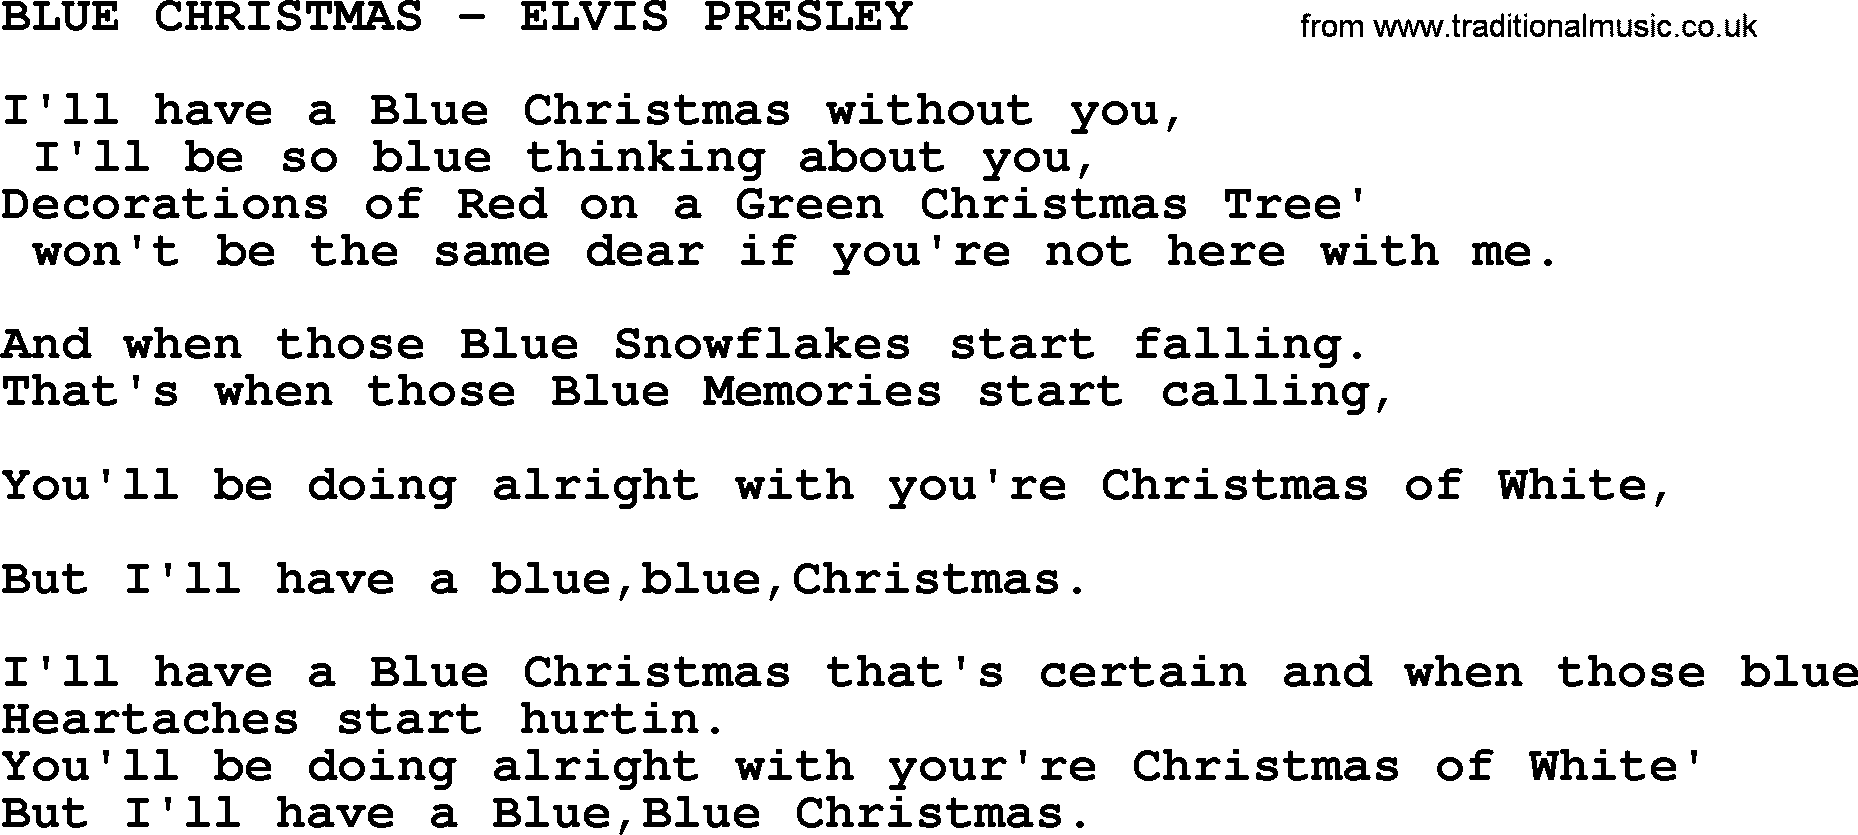 Elvis Presley song: Blue Christmas-Elvis Presley-.txt lyrics and chords